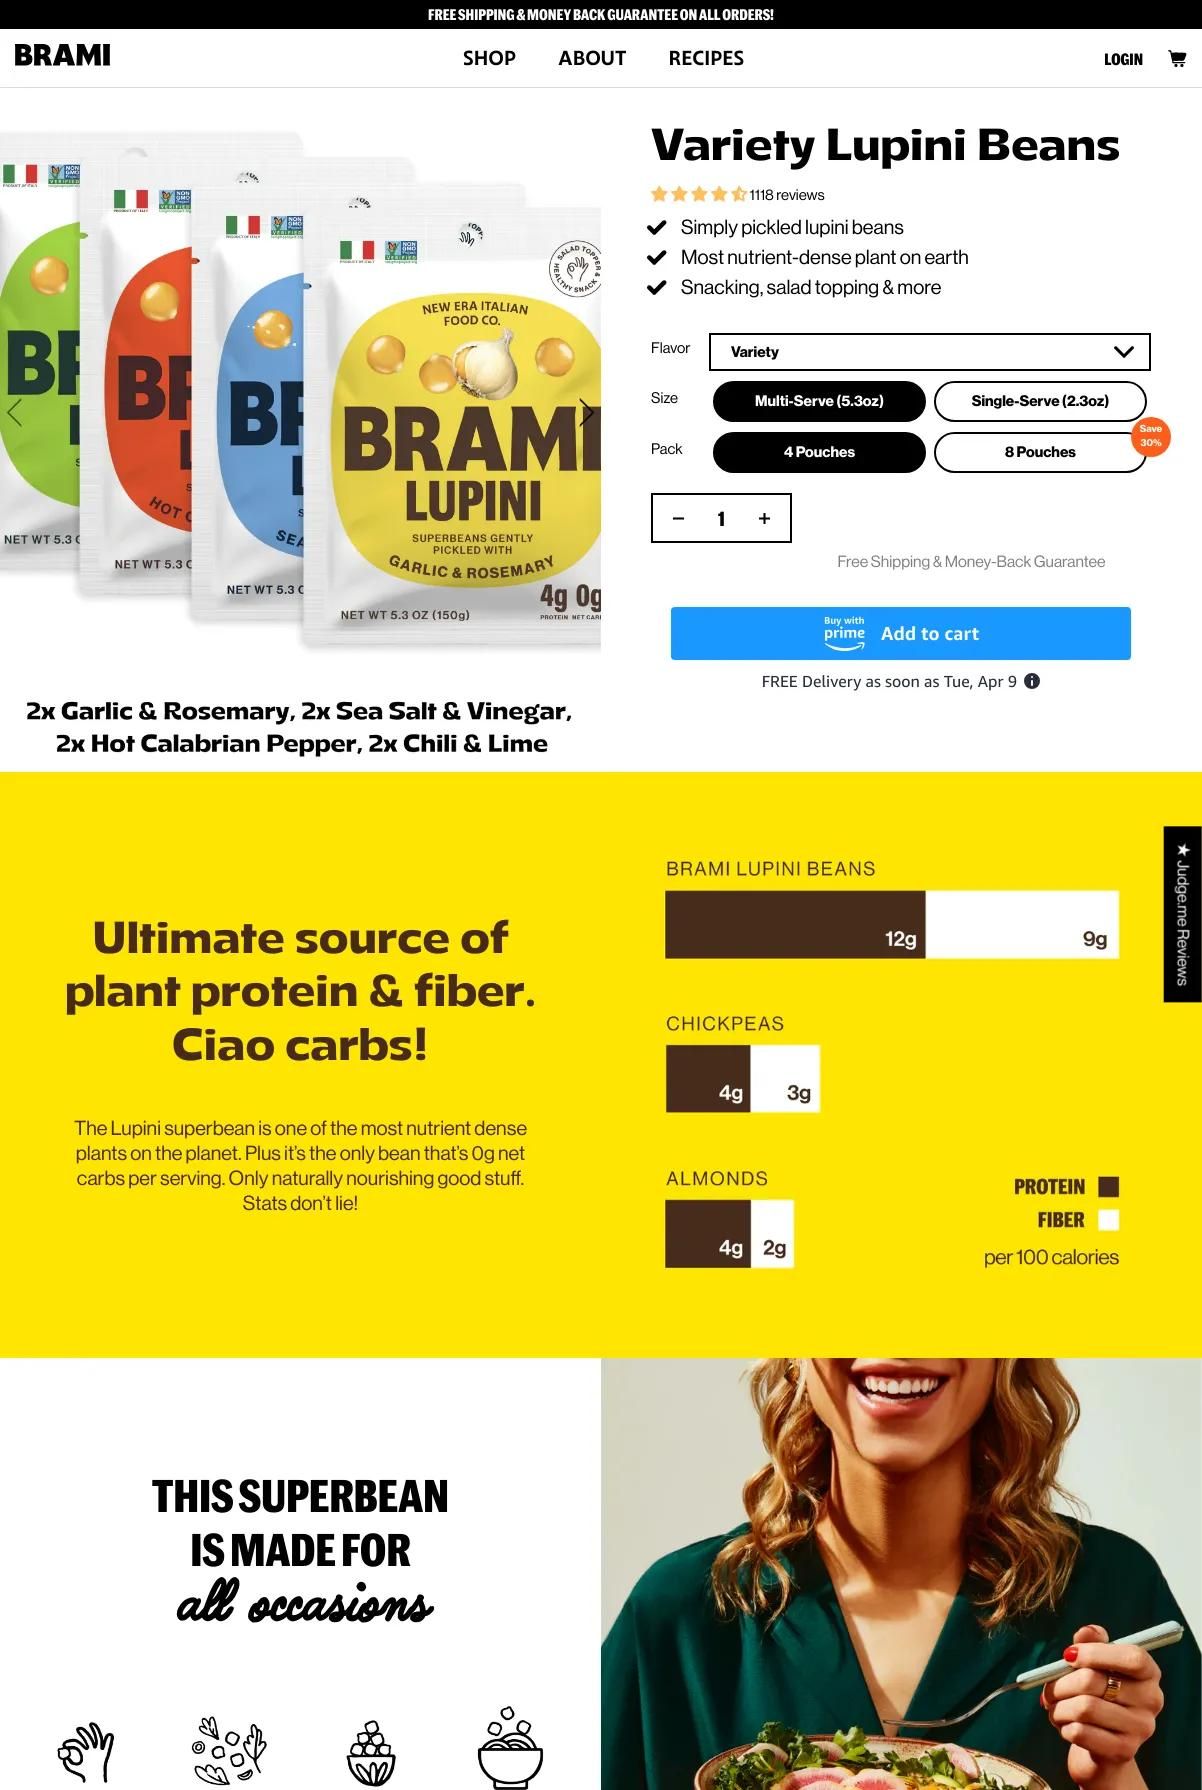 Screenshot 2 of BRAMI Snacks (Example Shopify Food and Beverage Website)